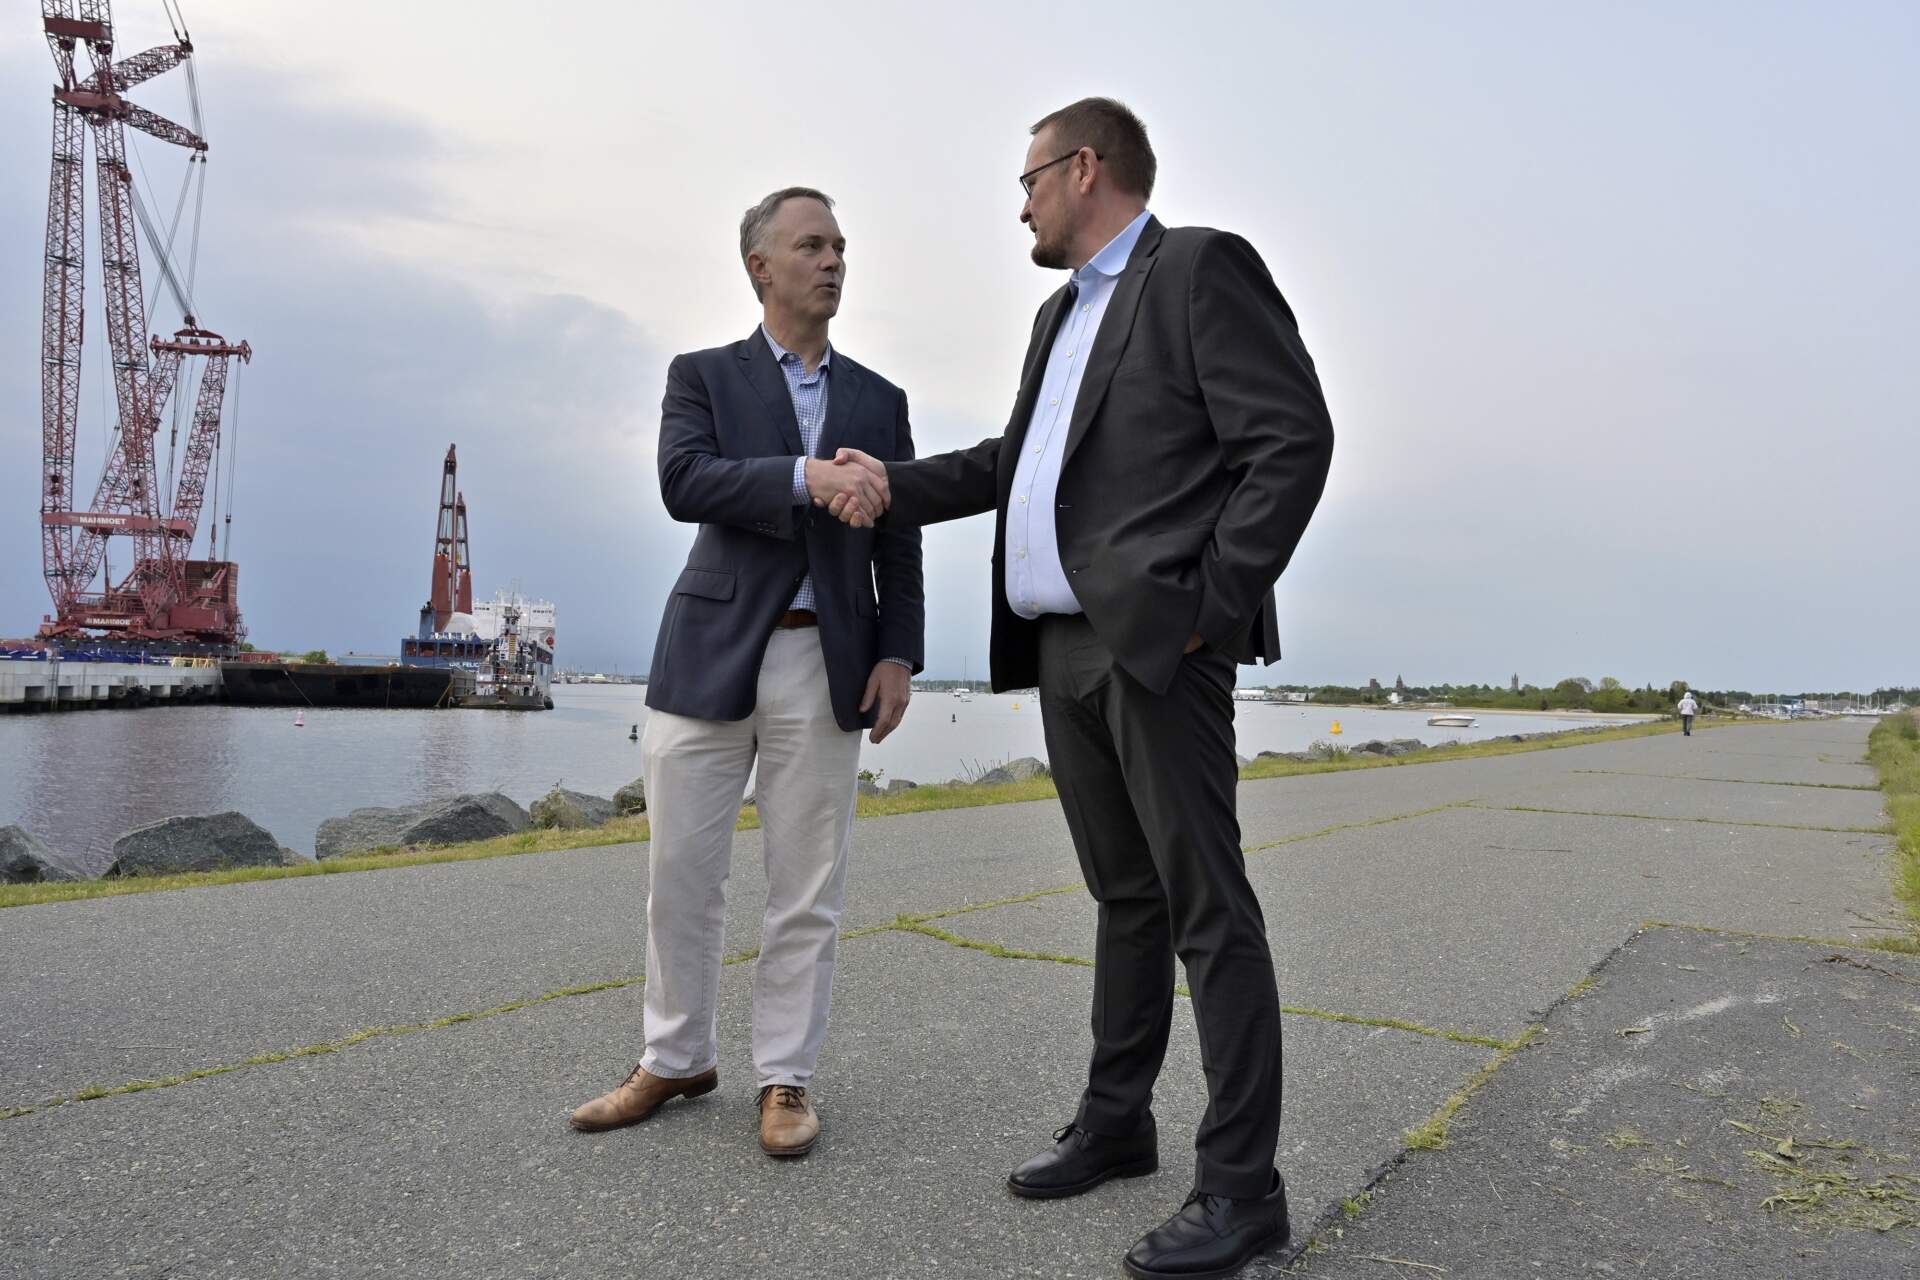 New Bedford Mayor Jon Mitchell and Vineyard Wind CEO Klaus Skoust Moeller shake hands in front of the ship UHL Felicity. (Josh Reynolds/AP)